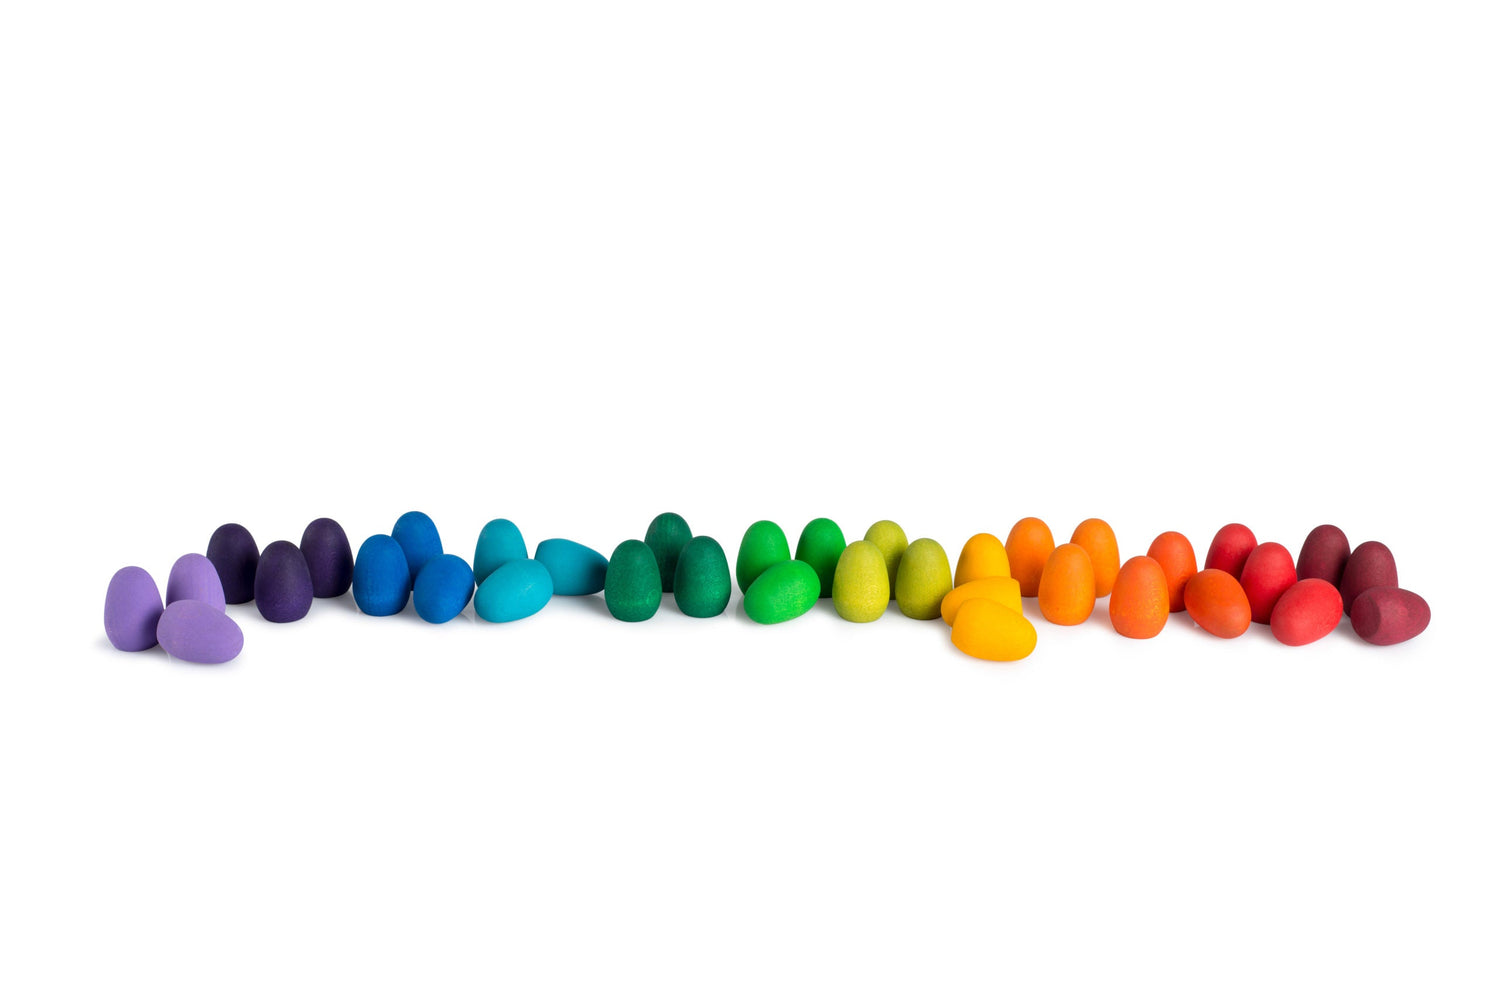 GRAPAT MANDALA RAINBOW EGGS by GRAPAT - The Playful Collective